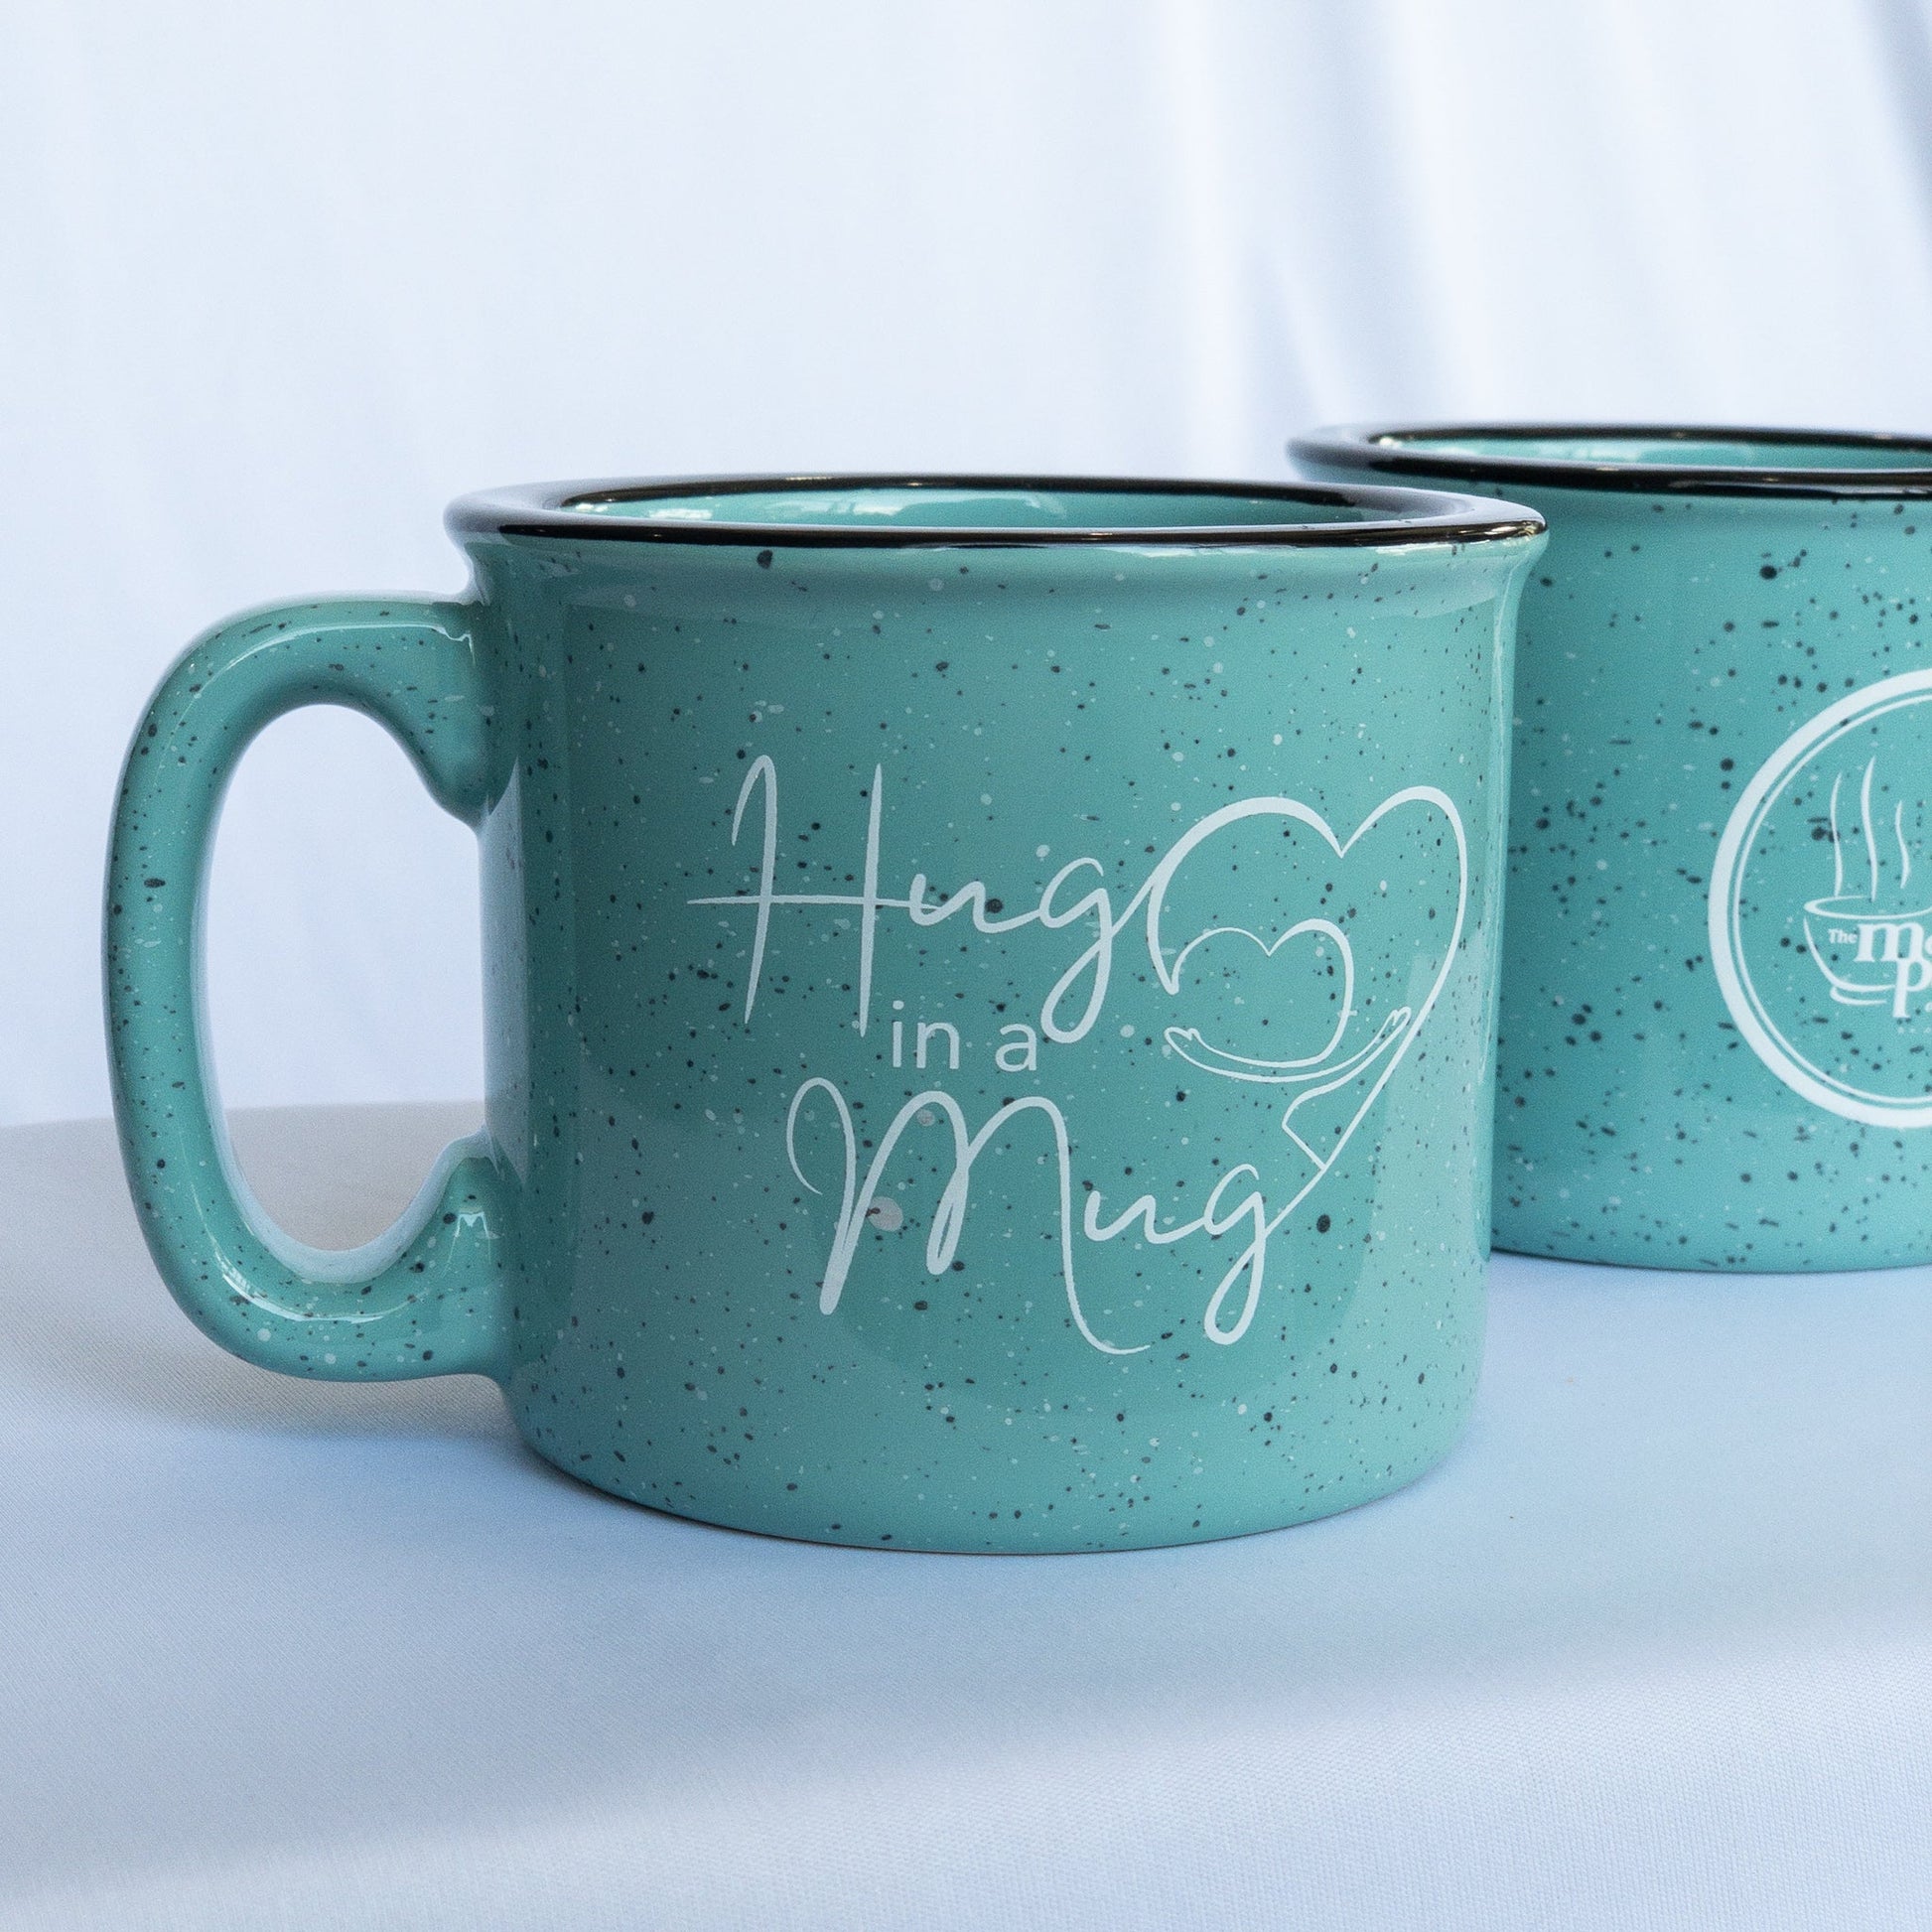 Hug in a Mug Ceramic Coffee Mug Encouragement - The Meeting Place on Market